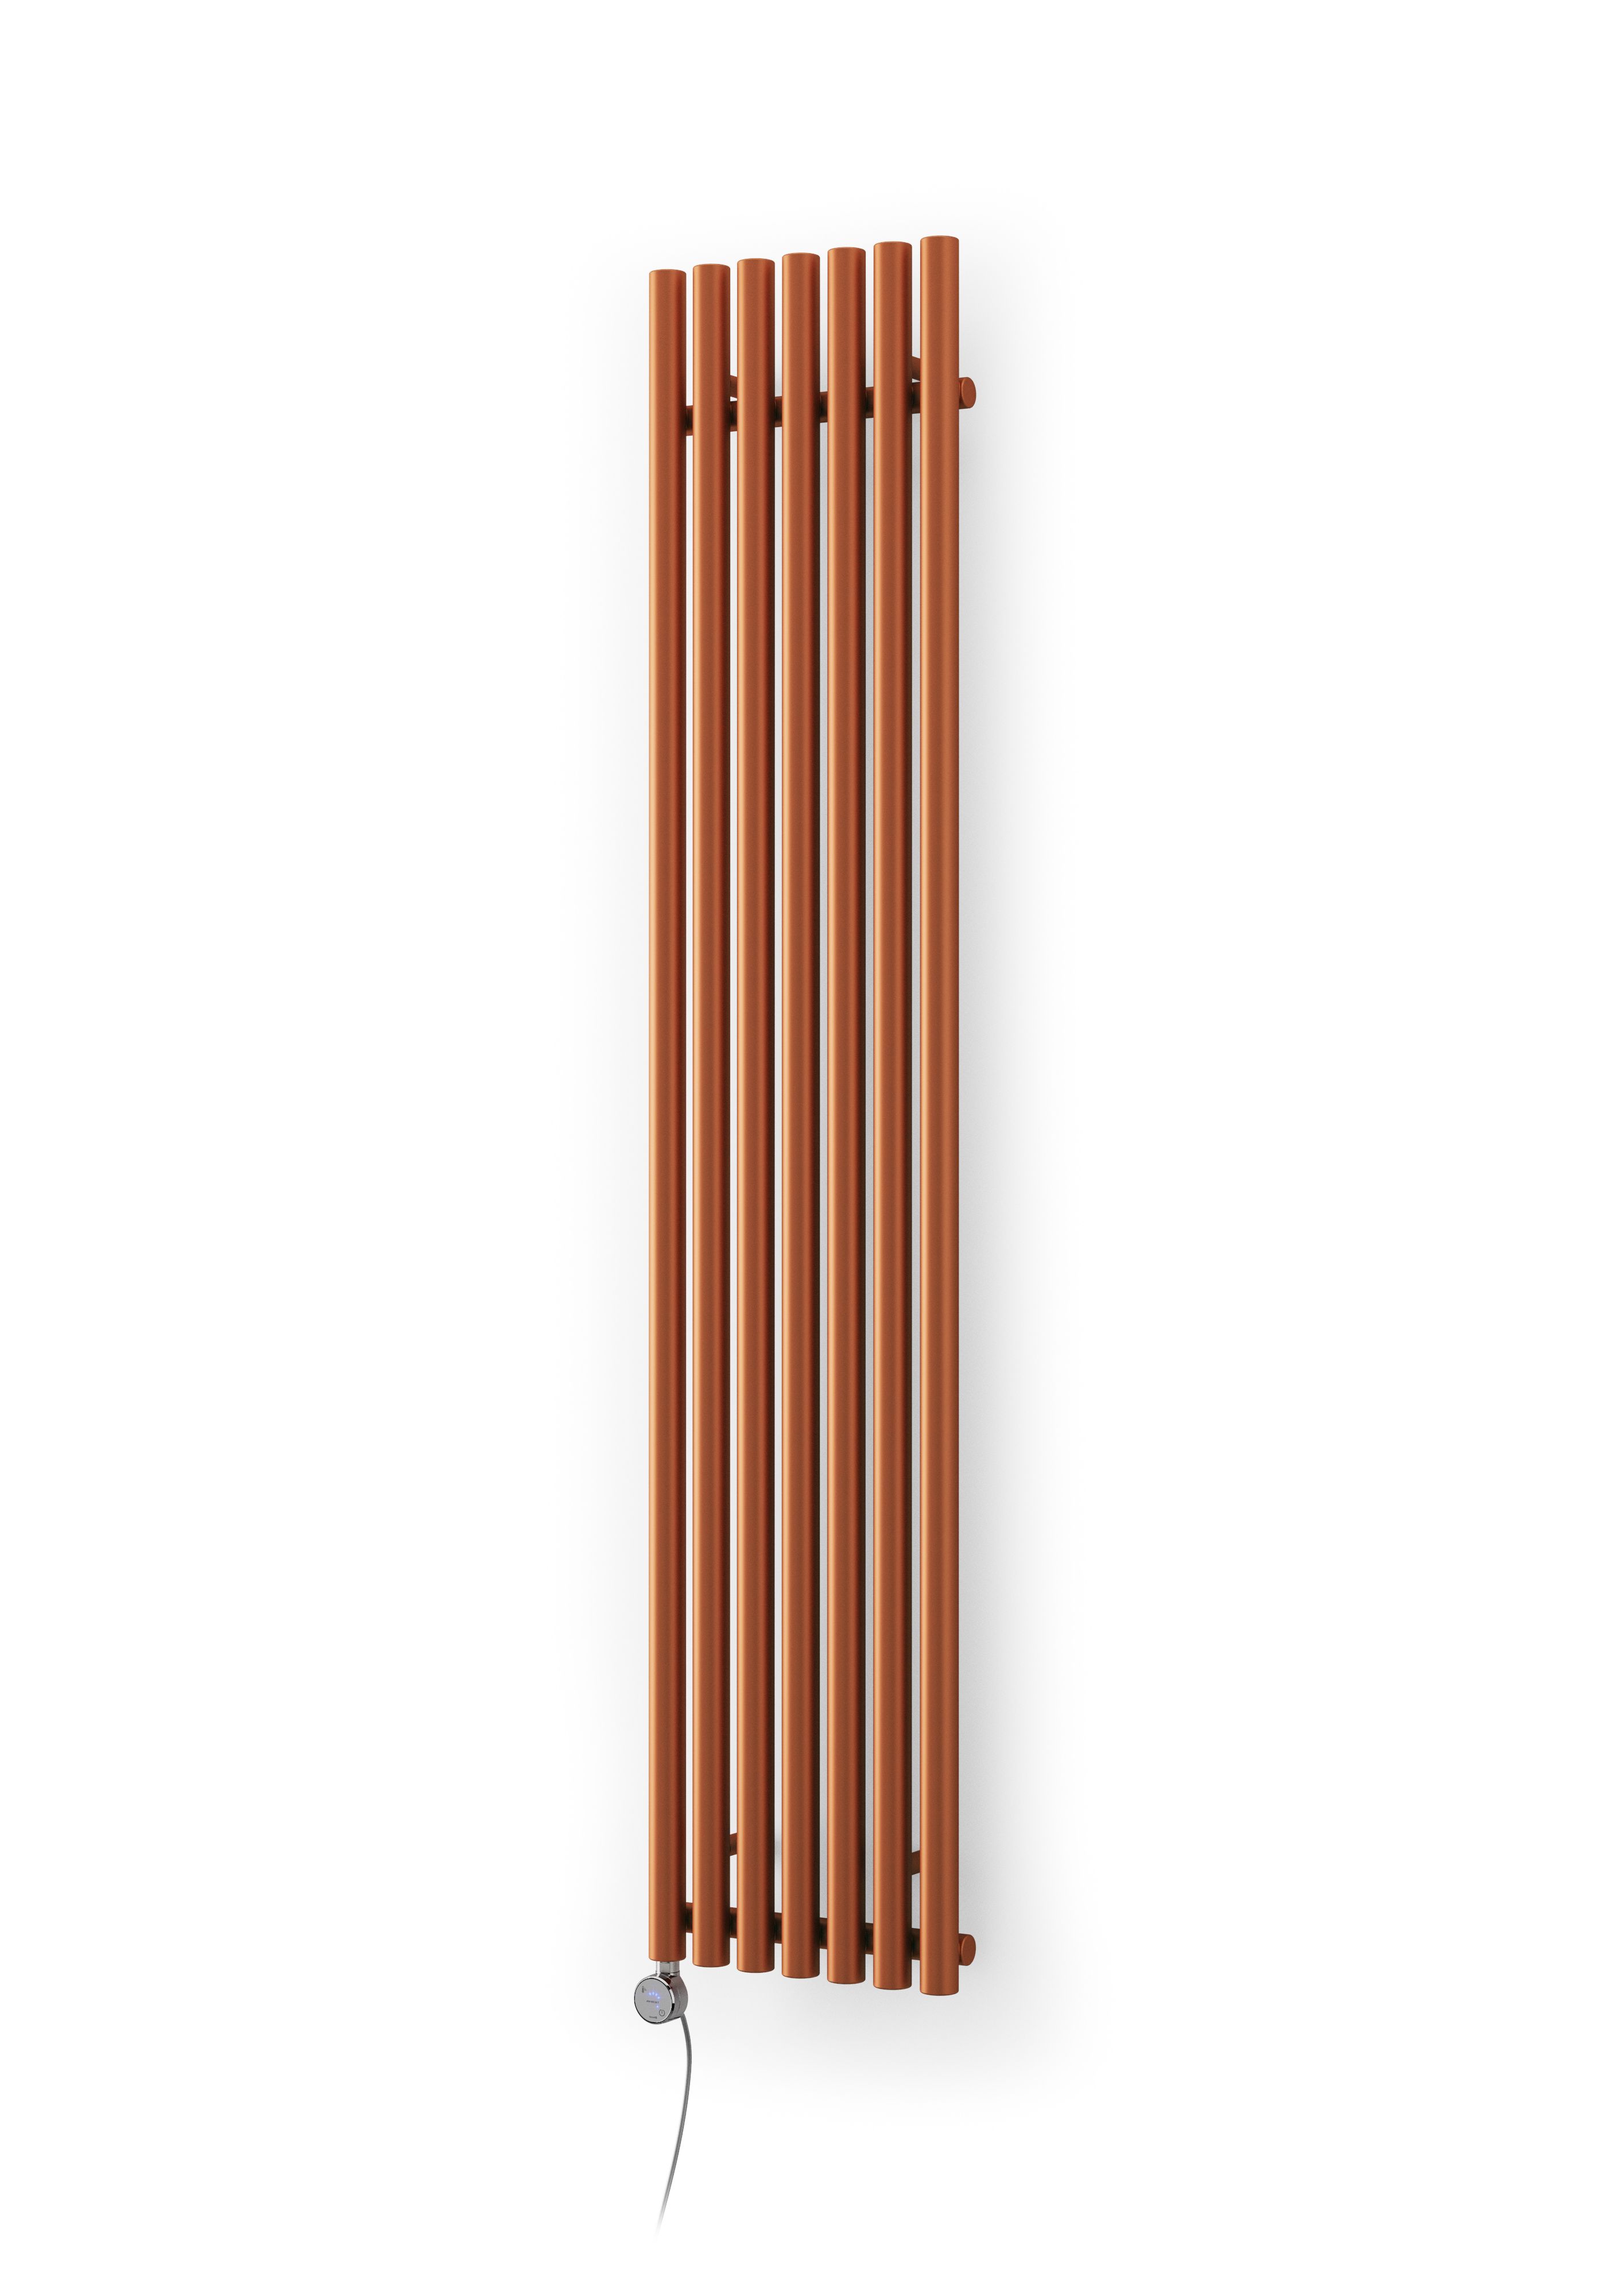 Terma Rolo Room Matt copper Vertical Electric designer Radiator, (W)370mm x (H)1800mm